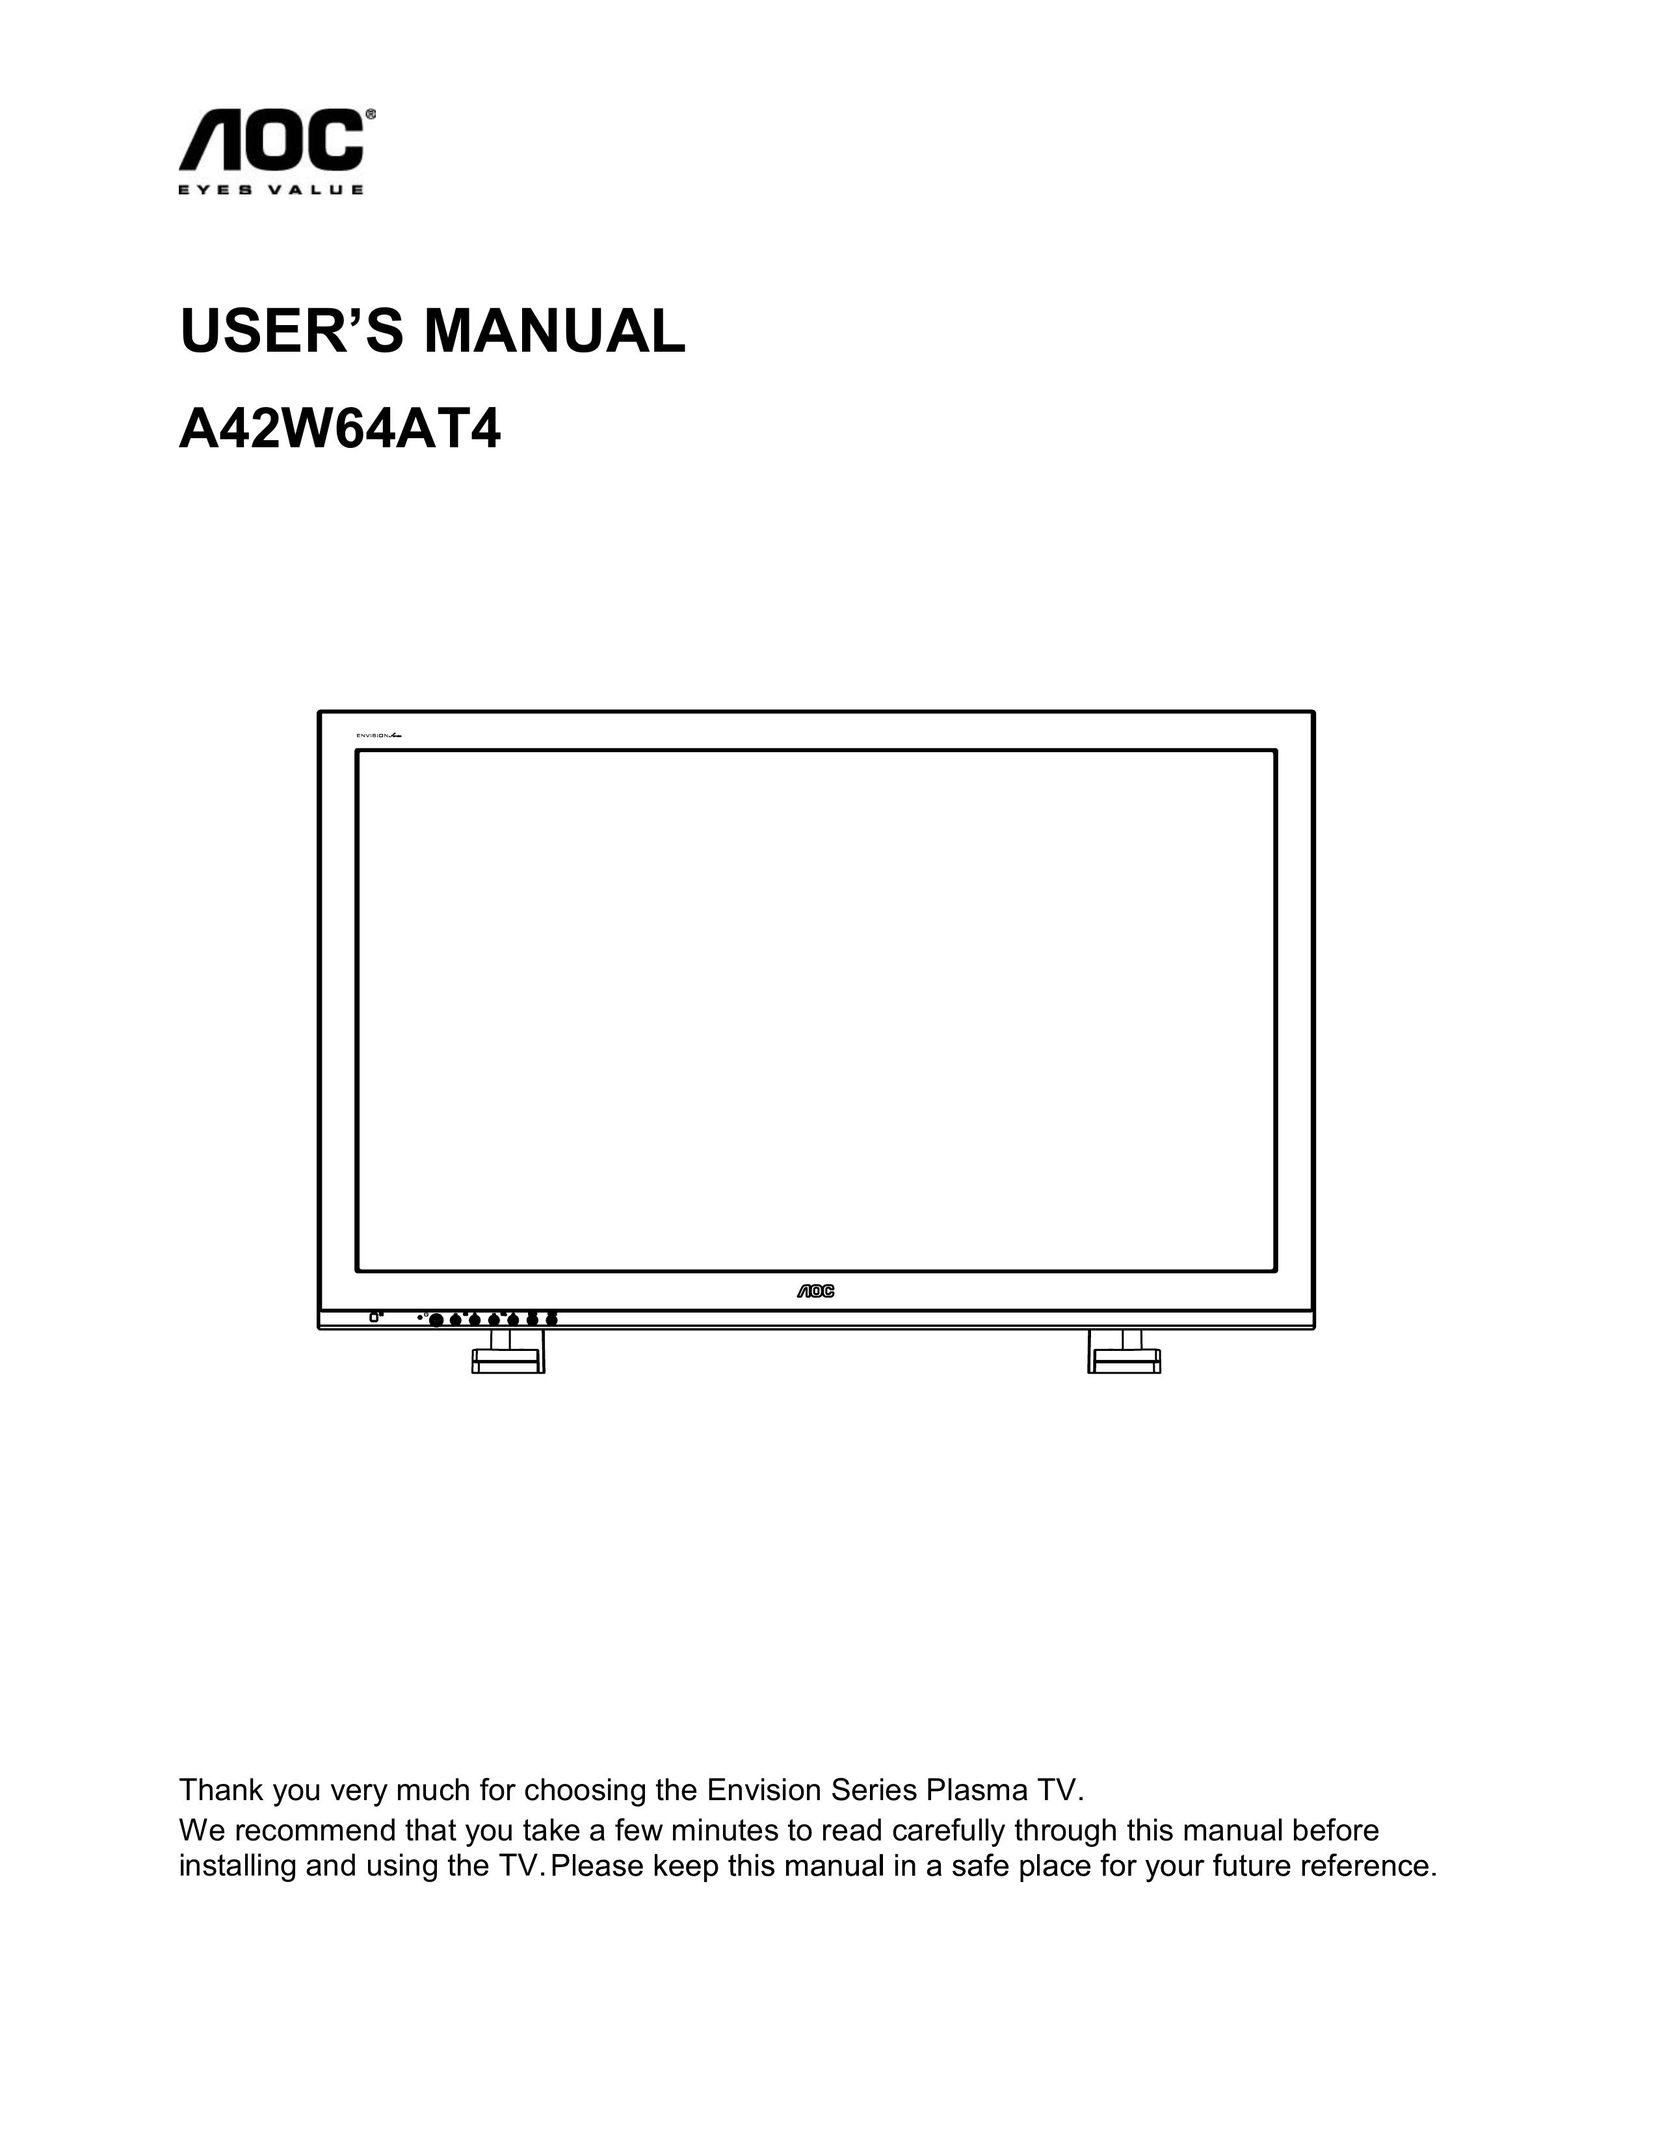 AOC A42W64AT4 Flat Panel Television User Manual